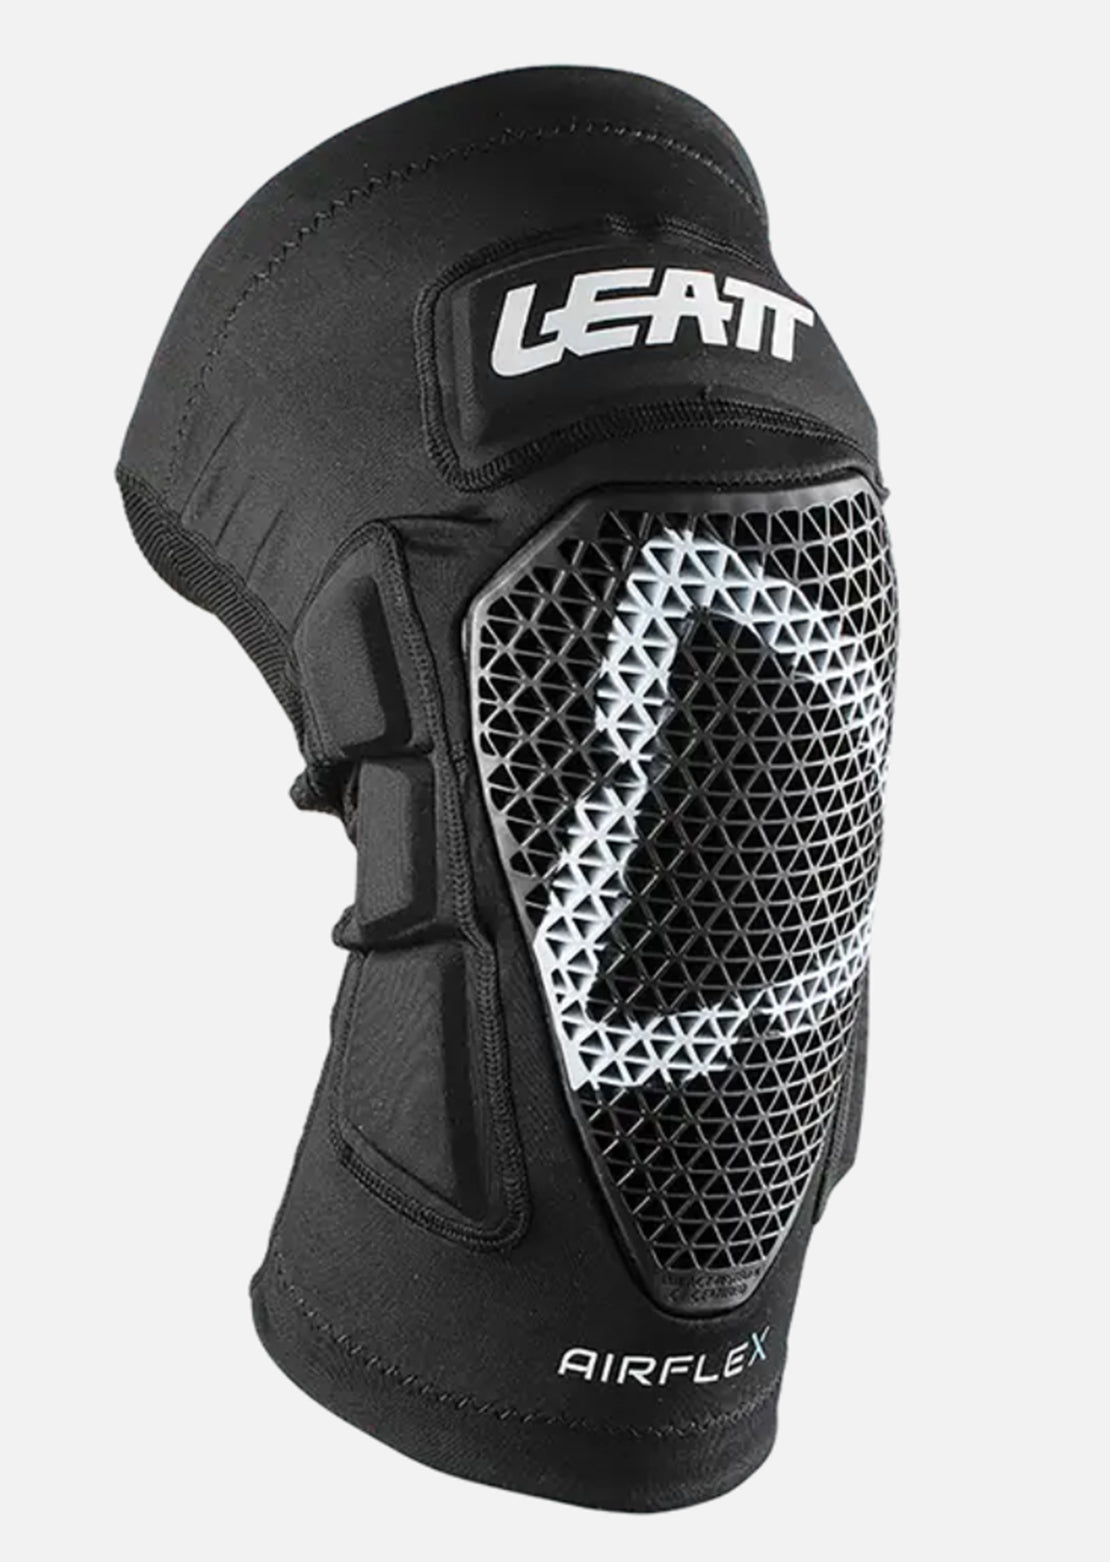 Leatt AirFlex Pro Knee Guards Black